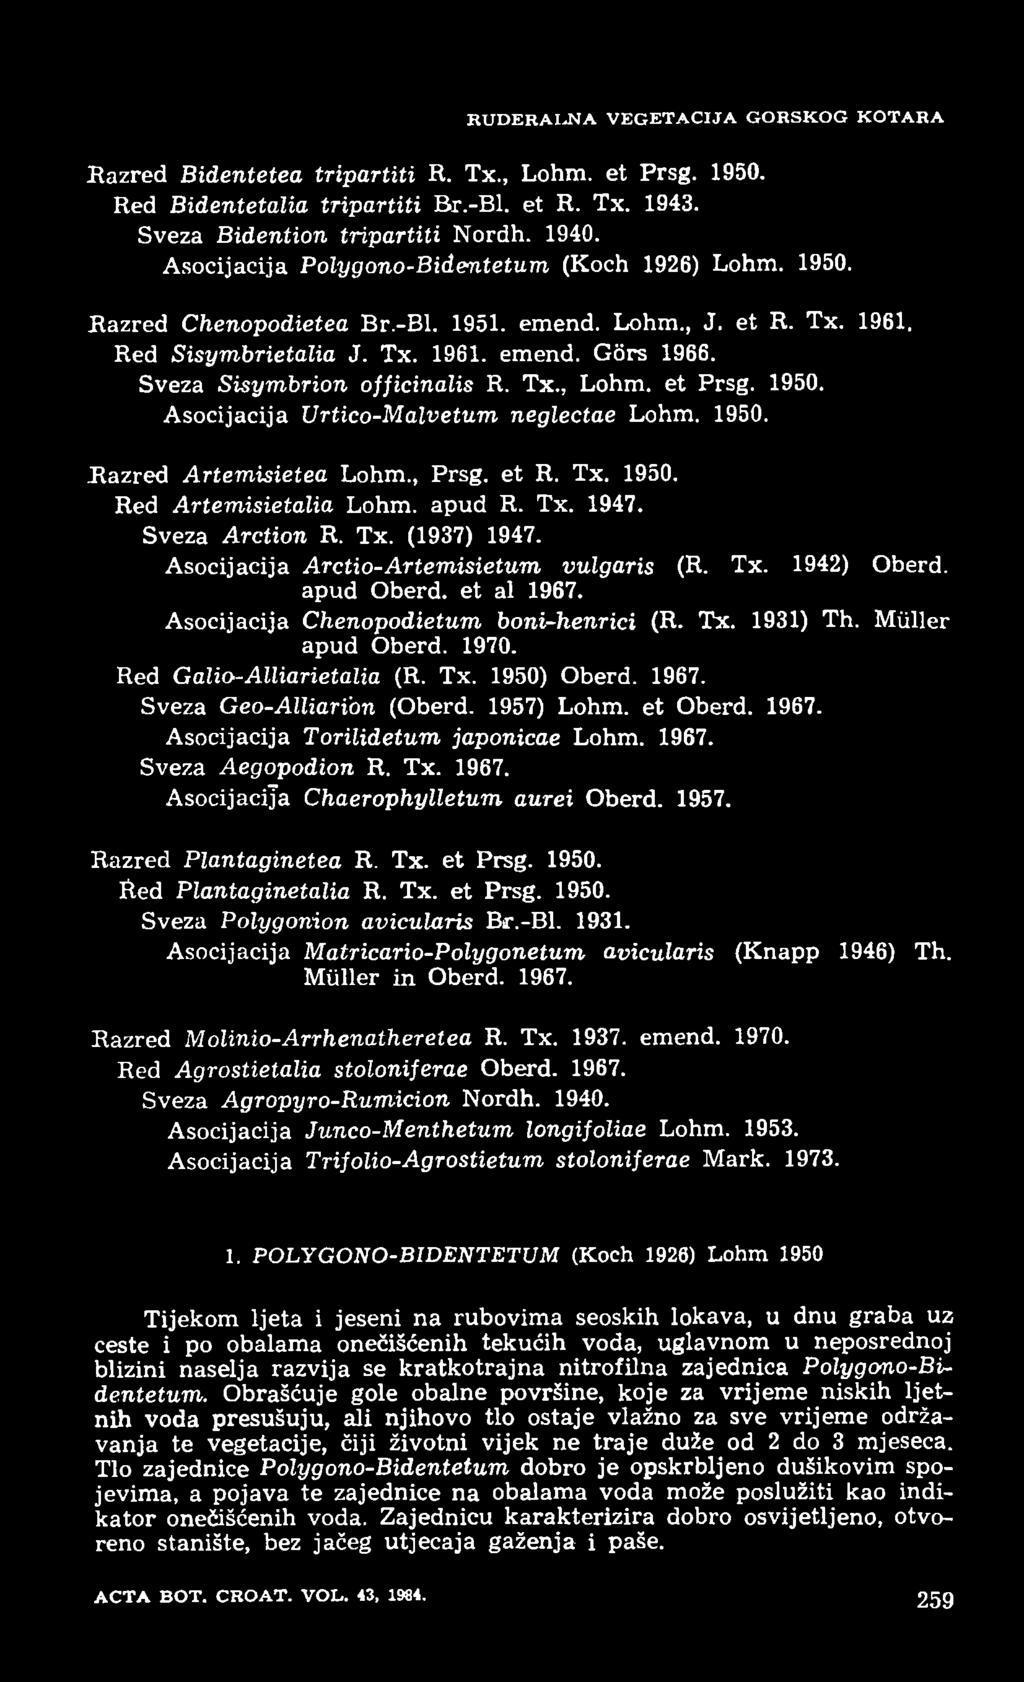 Sveza Sisymbrion officinalis R. Tx., Lohm. et Prsg. 1950. Asocijacija Urtico-Malvetum neglectae Lohm. 1950. Razred Artemisietea Lohm., Prsg. et R. Tx. 1950. Red Artemisietalia Lohm. apud R. Tx. 1947.